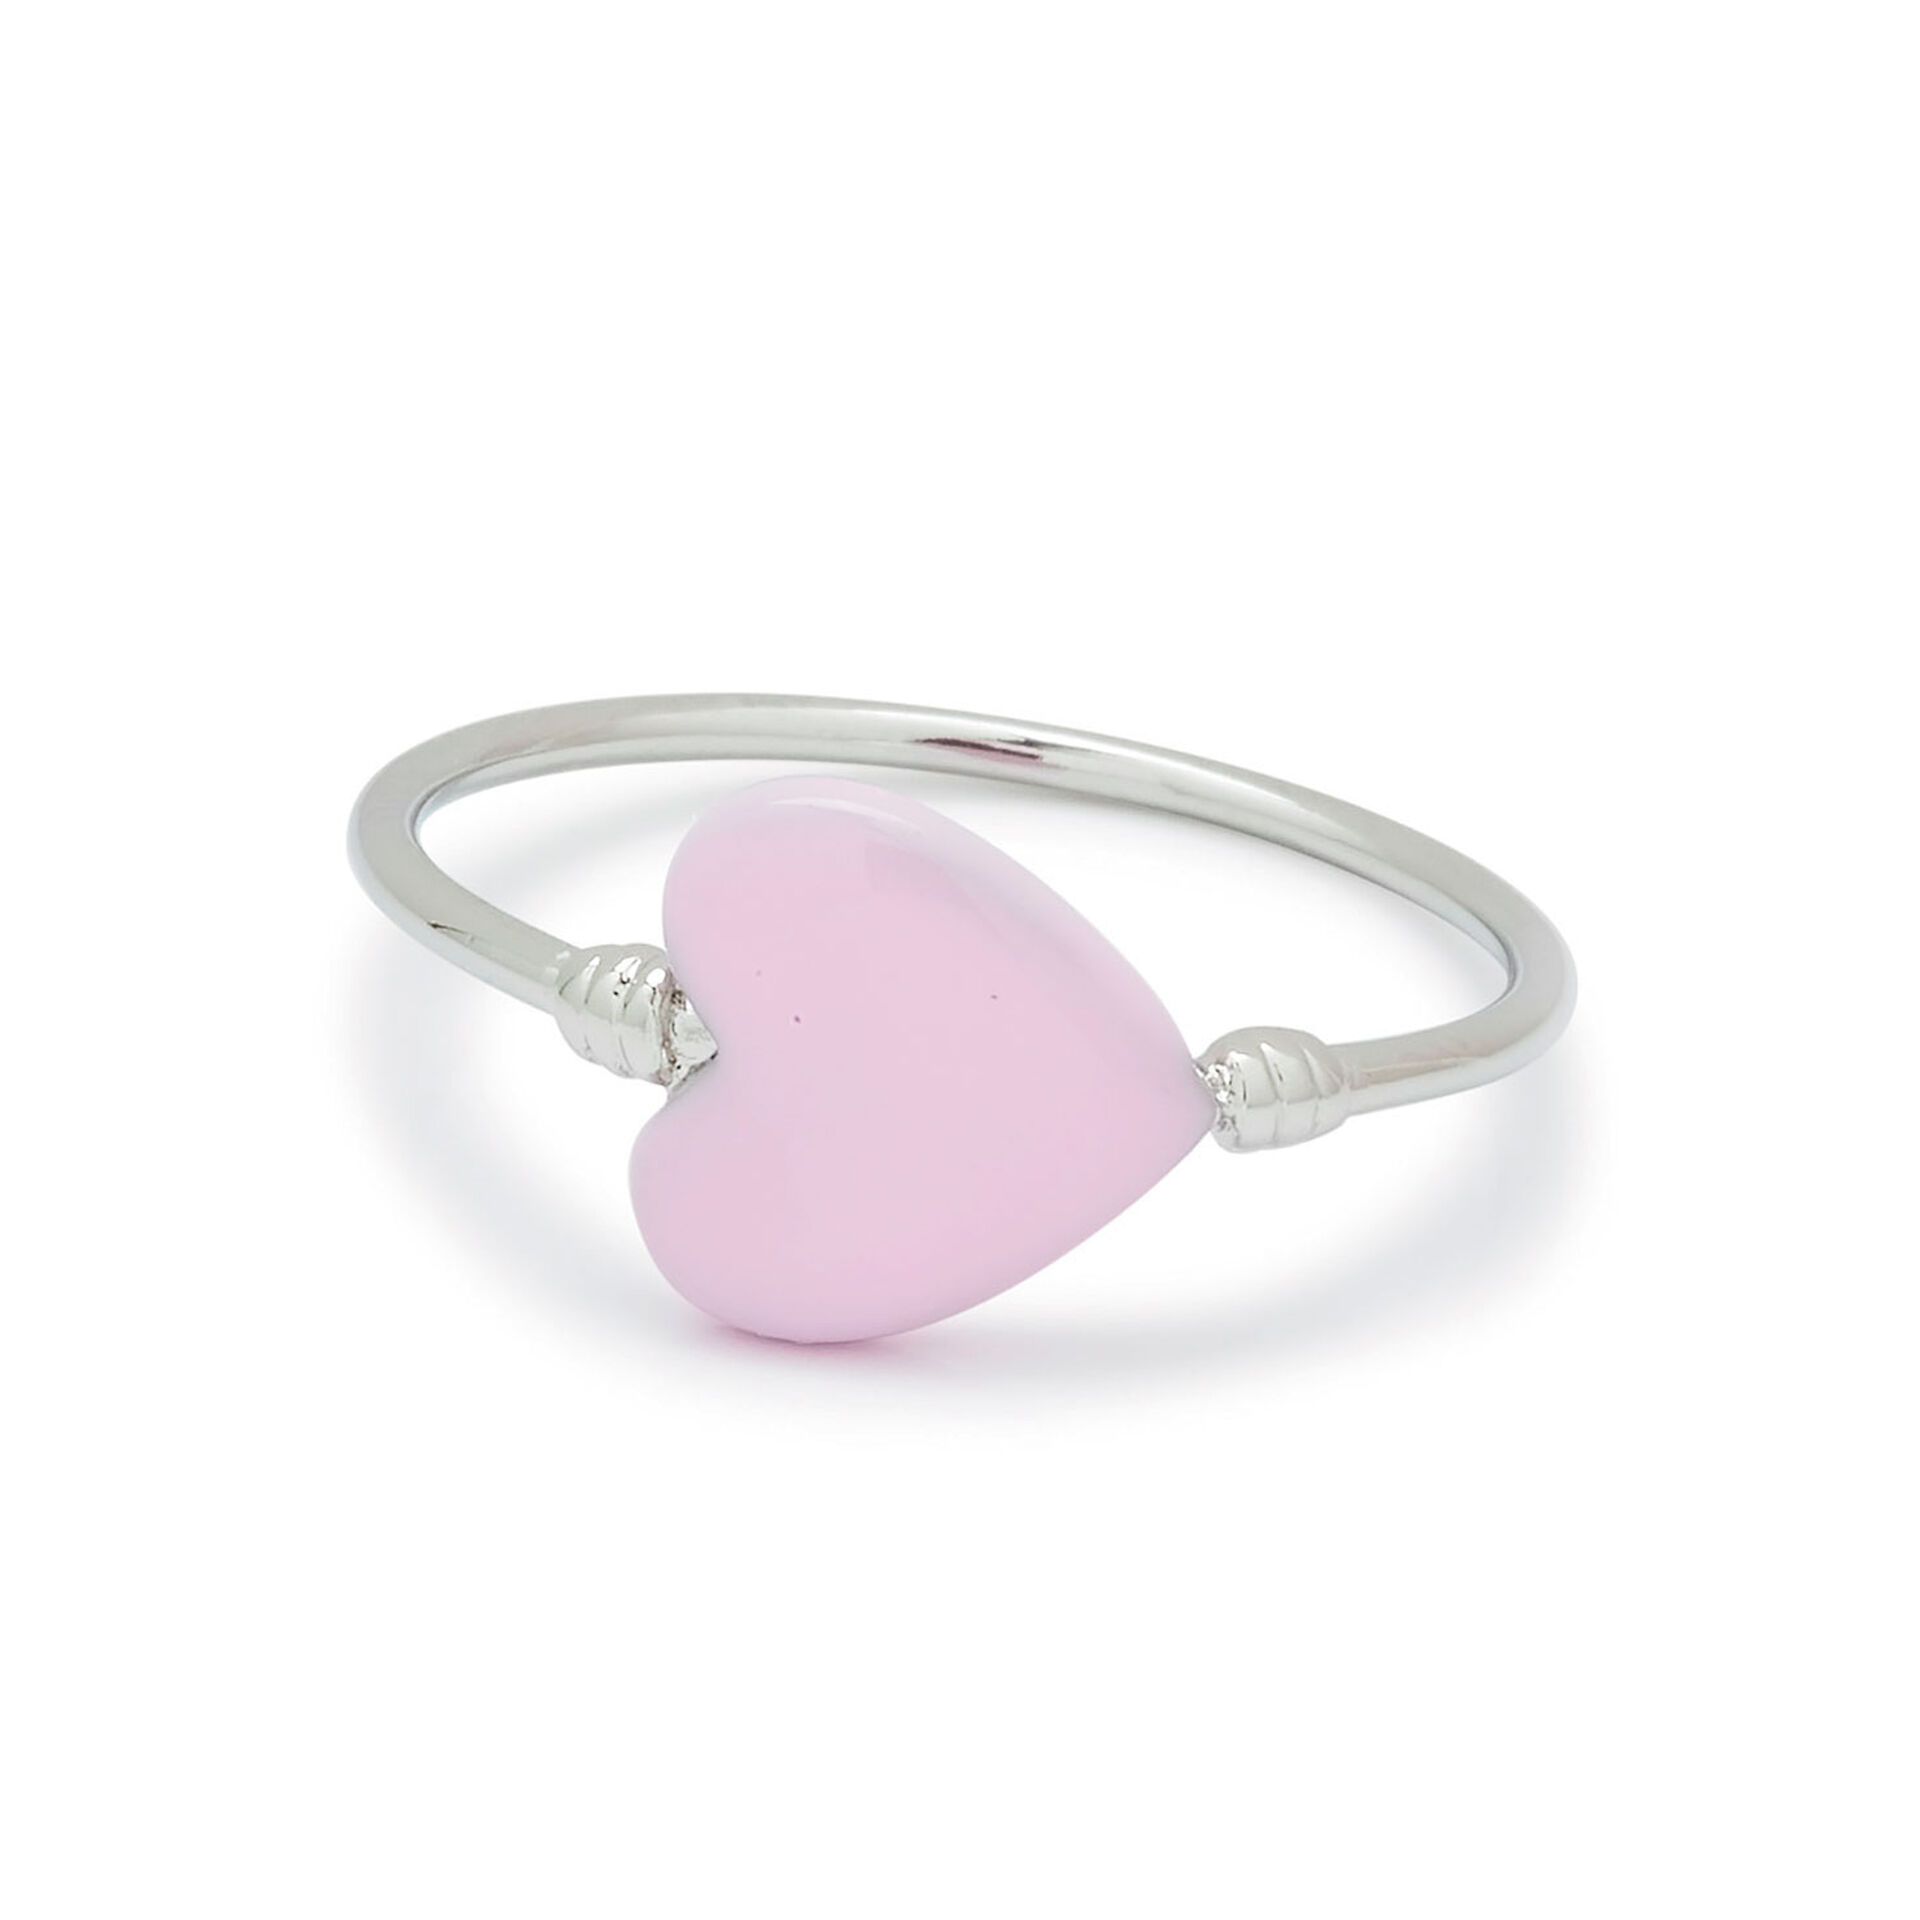 Pura Vida Silver Ring with Pink Enamel Heart, Size 8 Jewelry Hallmark